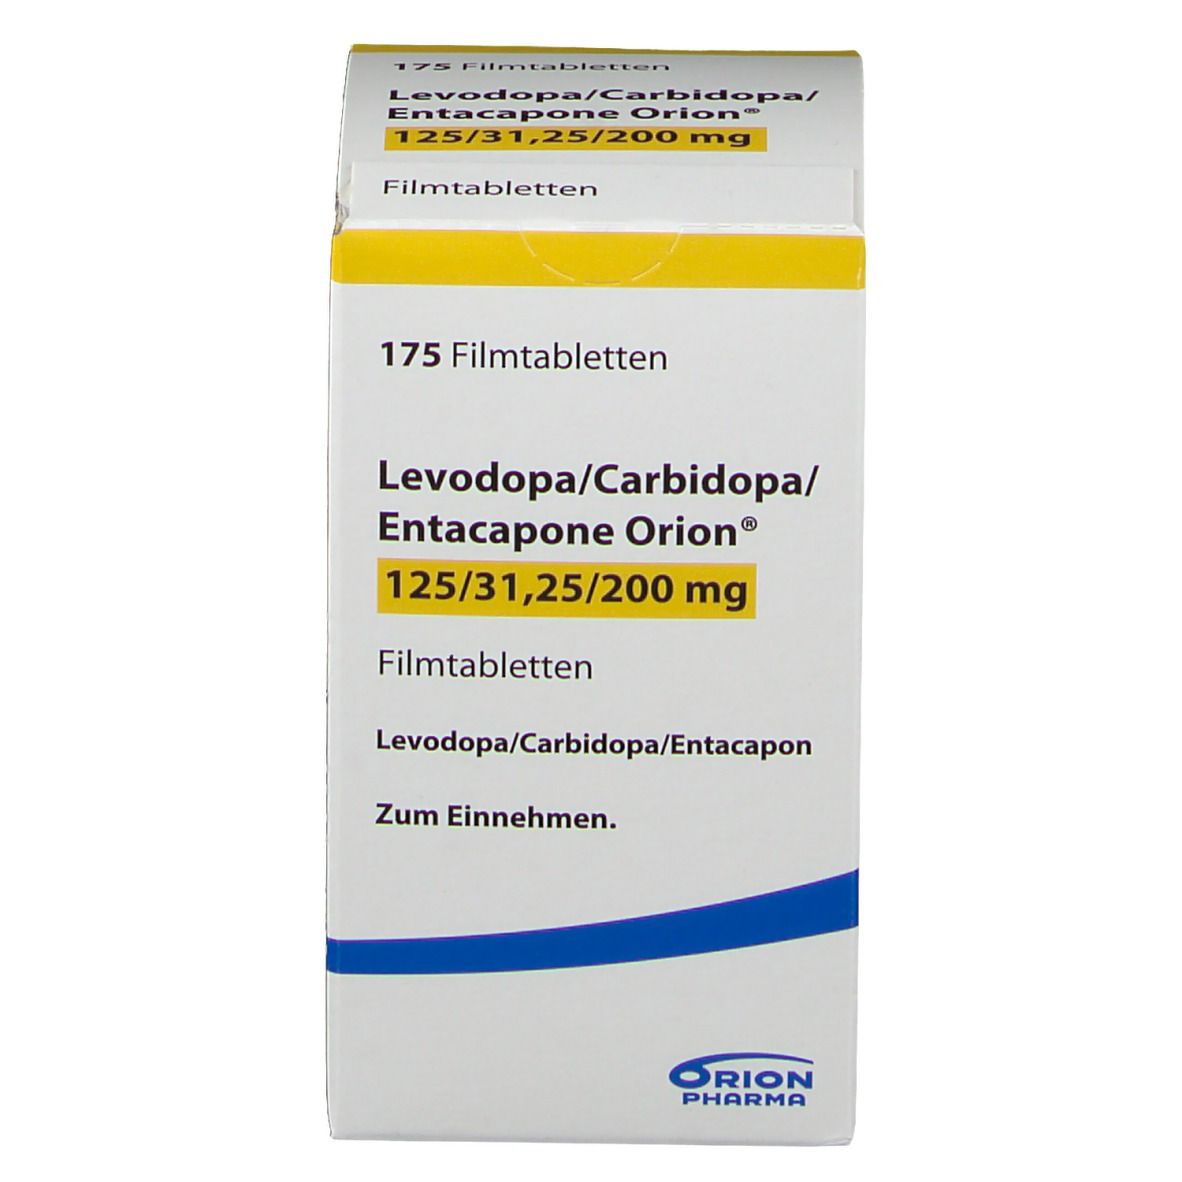 LEVODOPA/Carbidopa/Entacapone Orion 125 mg/31,25 mg/200 mg